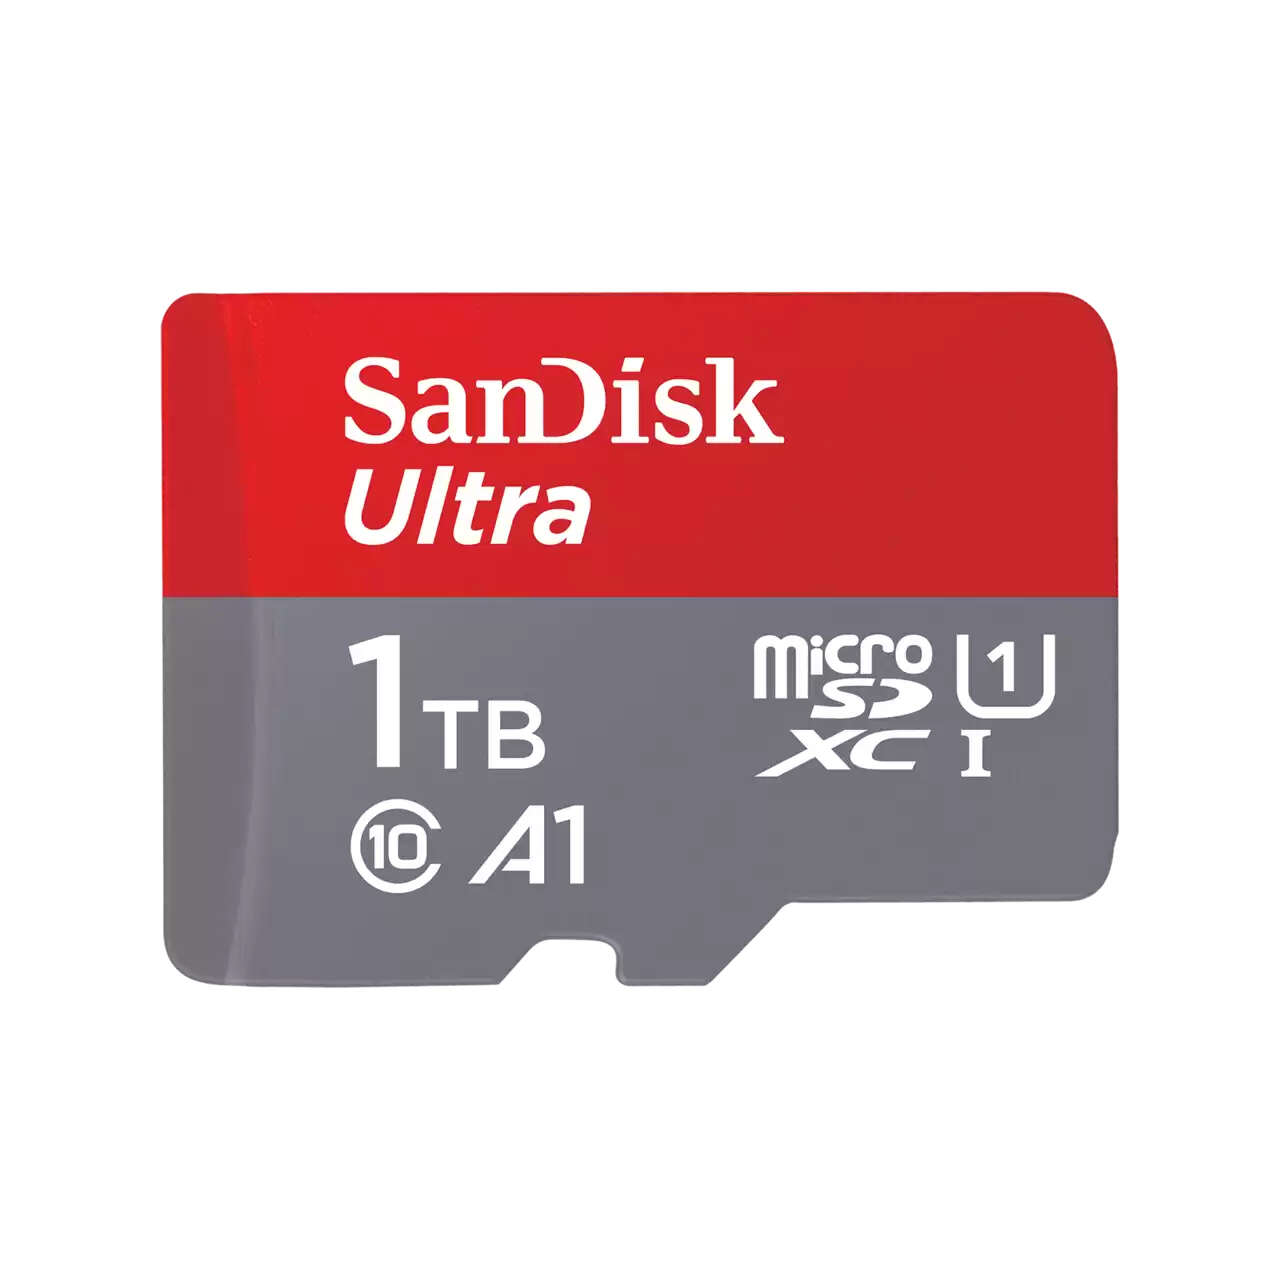 Sandisk ultra 1 tb microsdxc uhs-i class 10